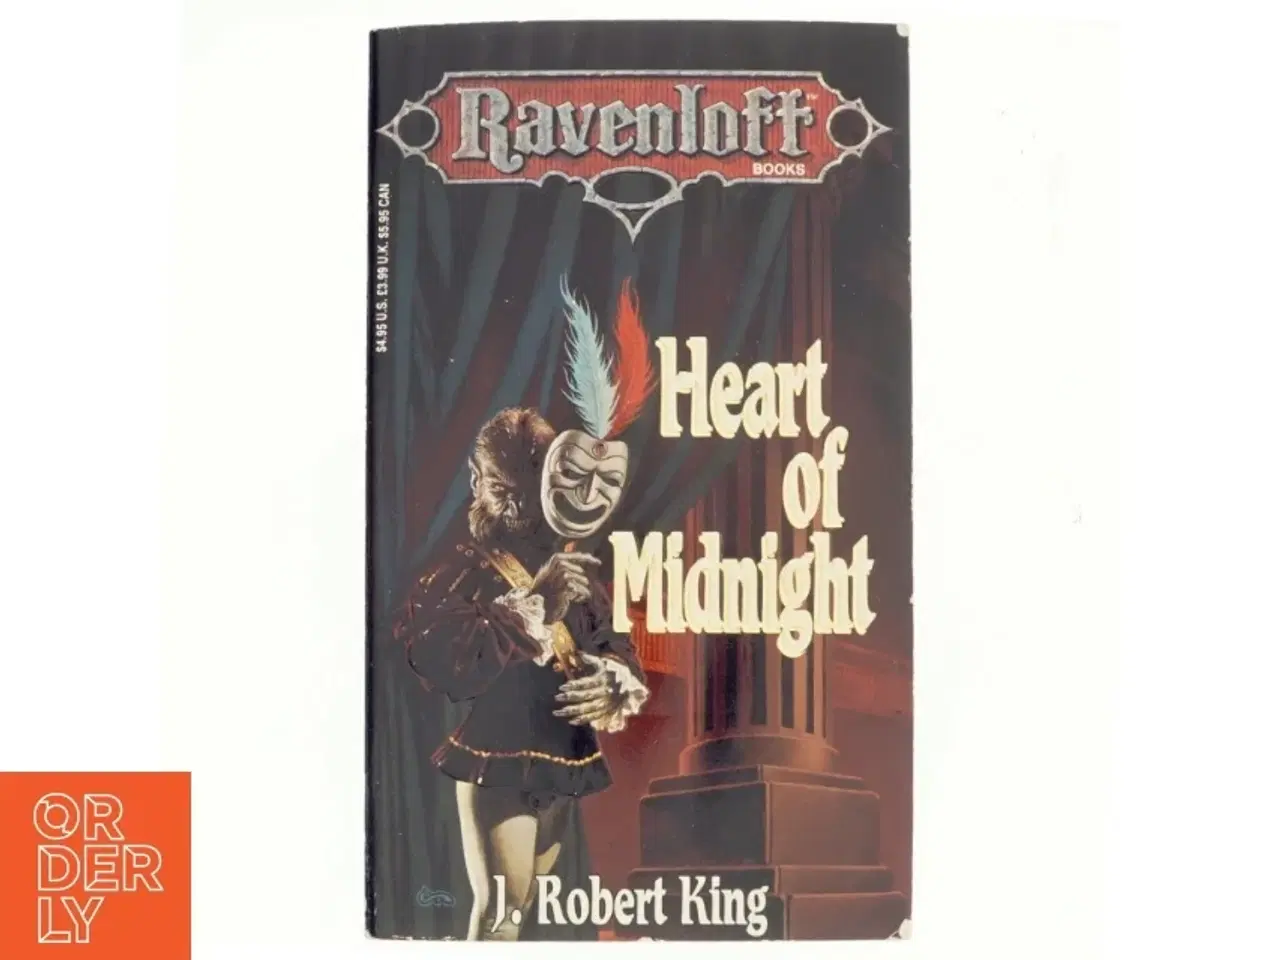 Billede 1 - Ravenloff, Heart of Midnight, J.Robert King